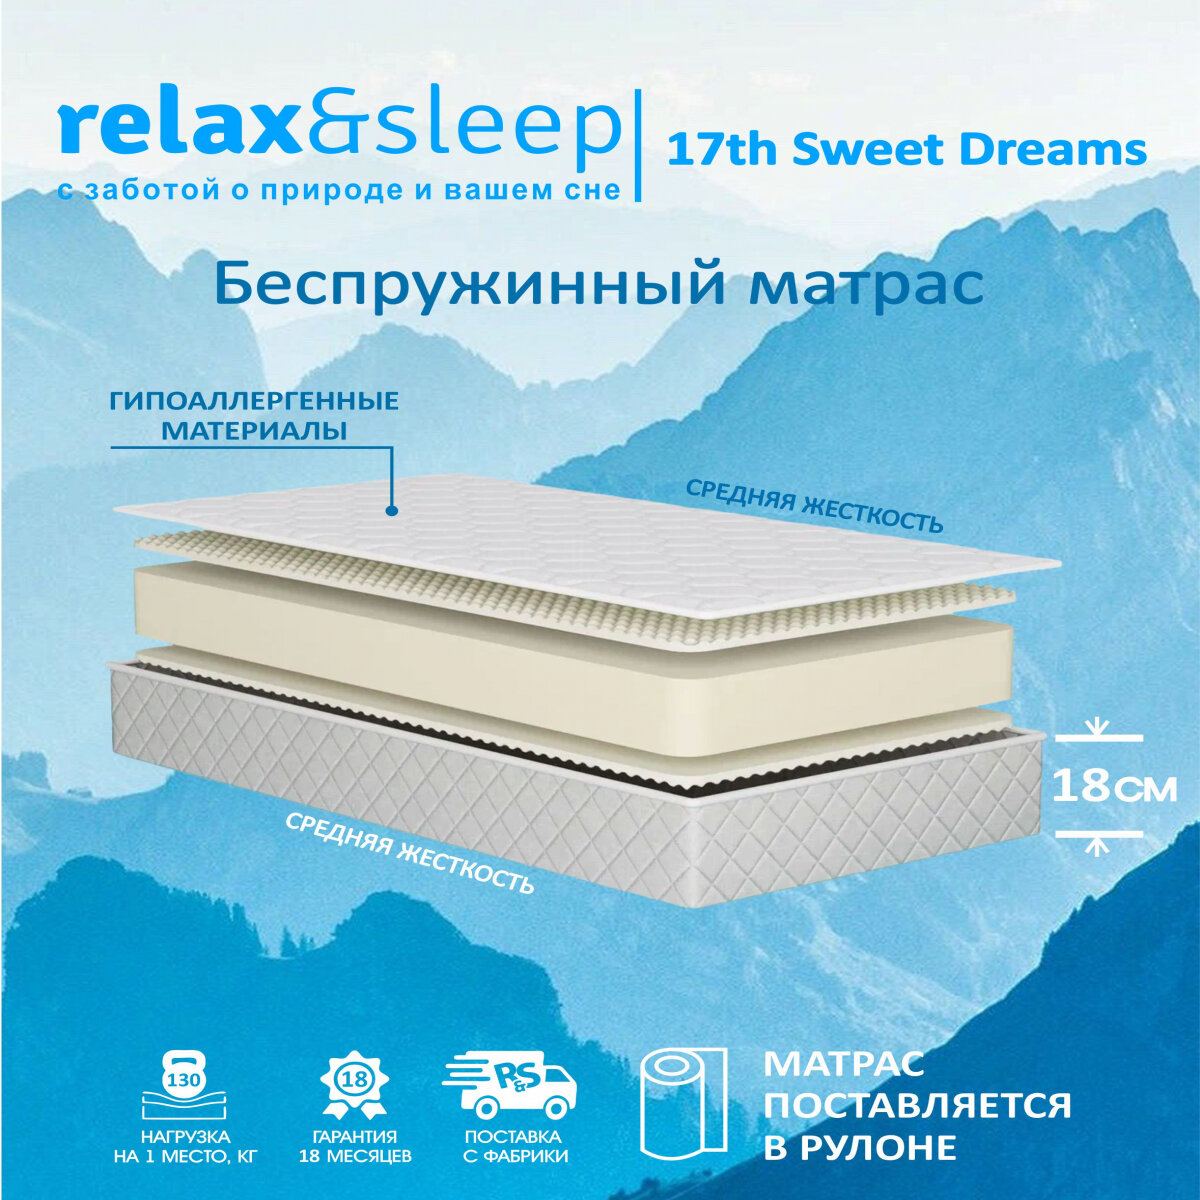 Матрас Relax&Sleep ортопедический беспружинный 17th Sweet Dreams (90 / 190)